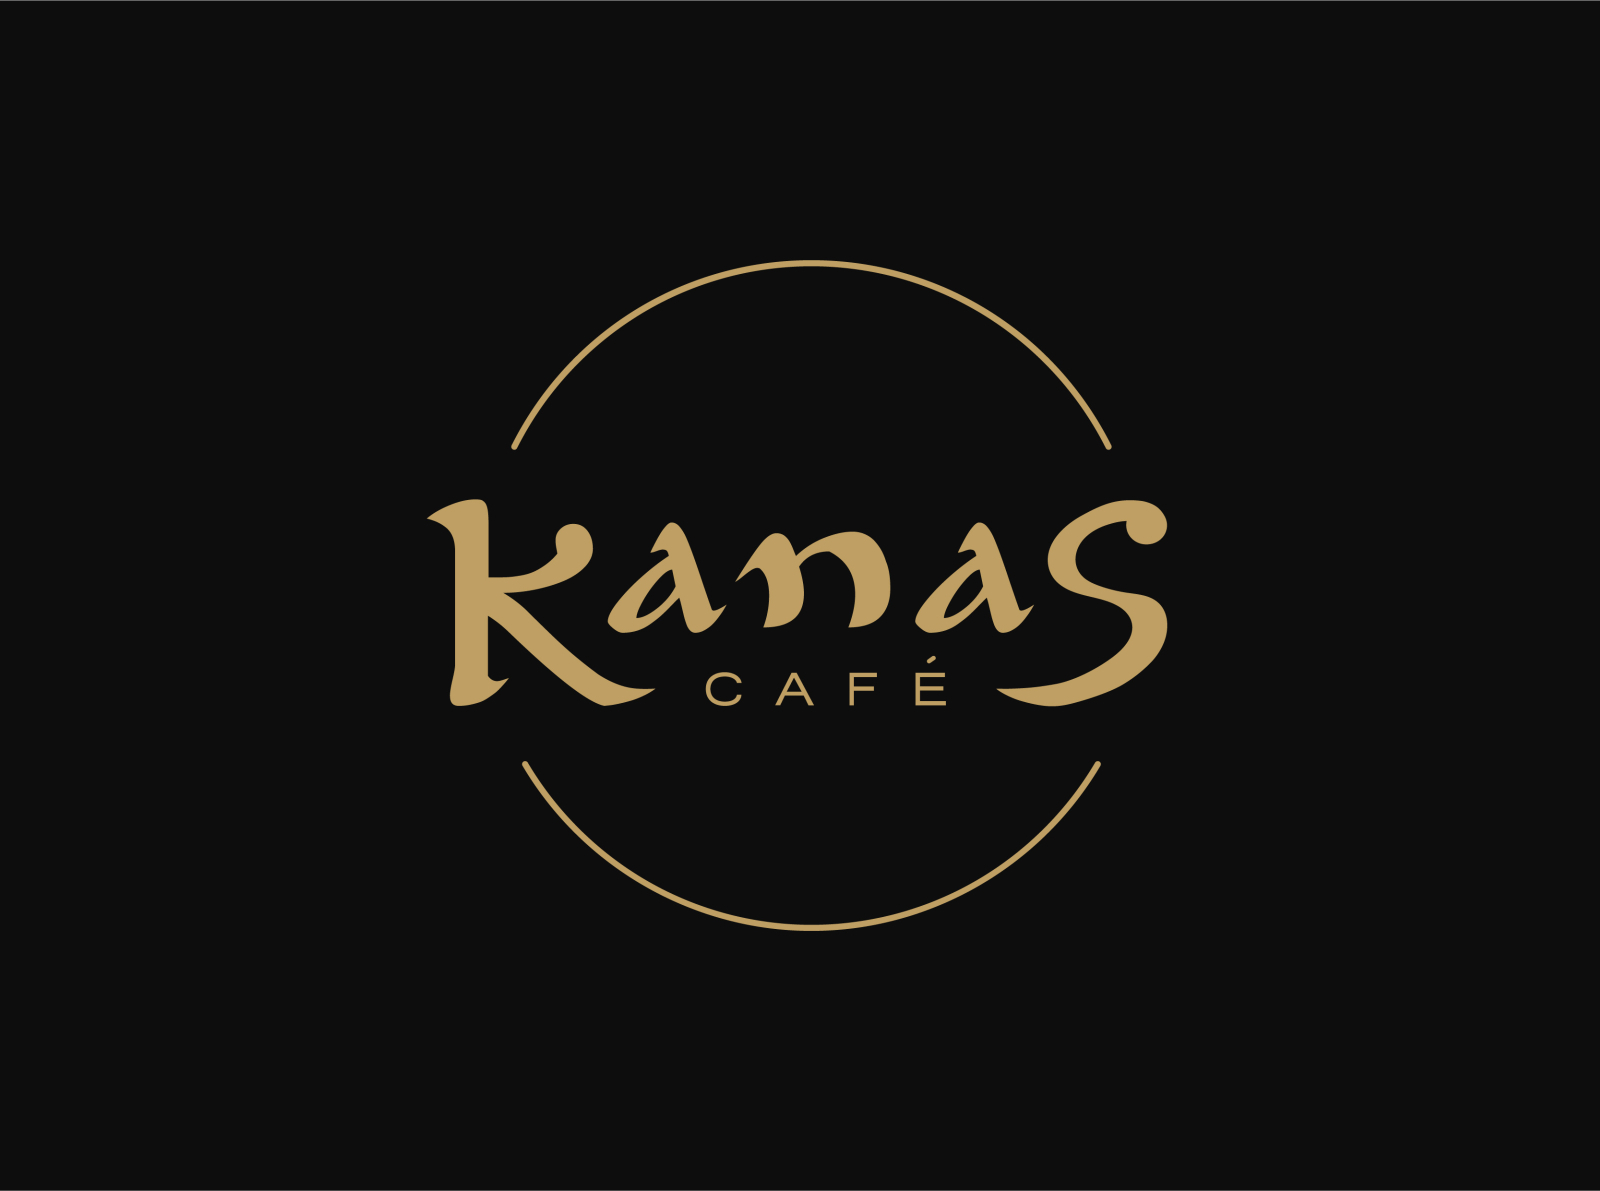 Kanas Café Logo by Jay Jordan Uy on Dribbble